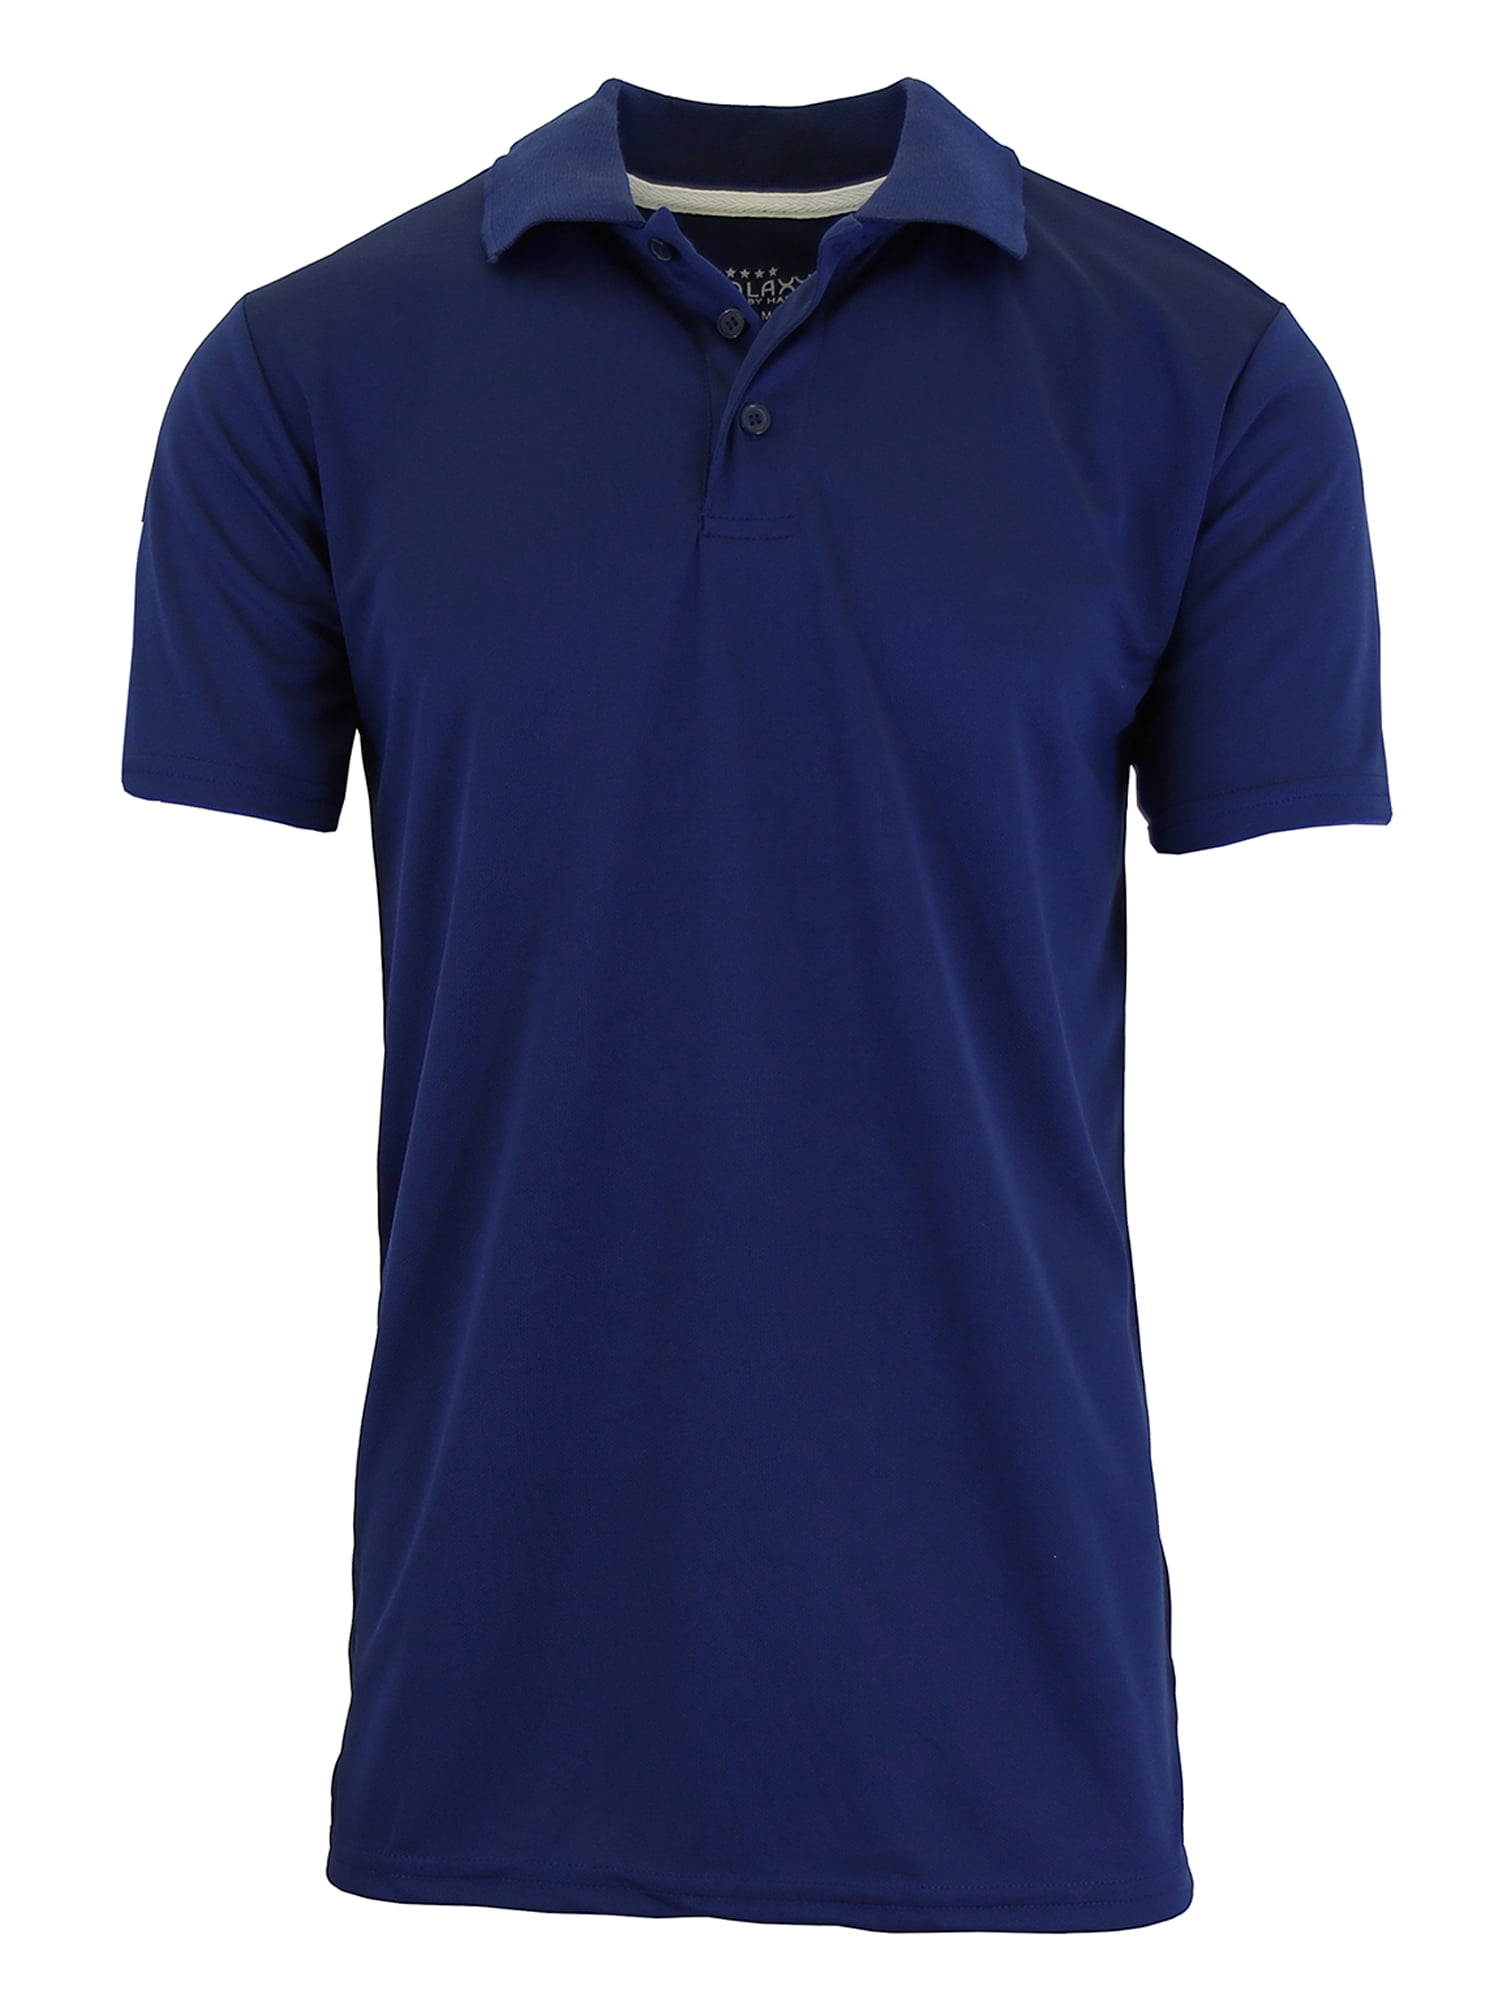 GBH - Men's Dry Fit Moisture-Wicking Polo Shirt - Walmart.com - Walmart.com